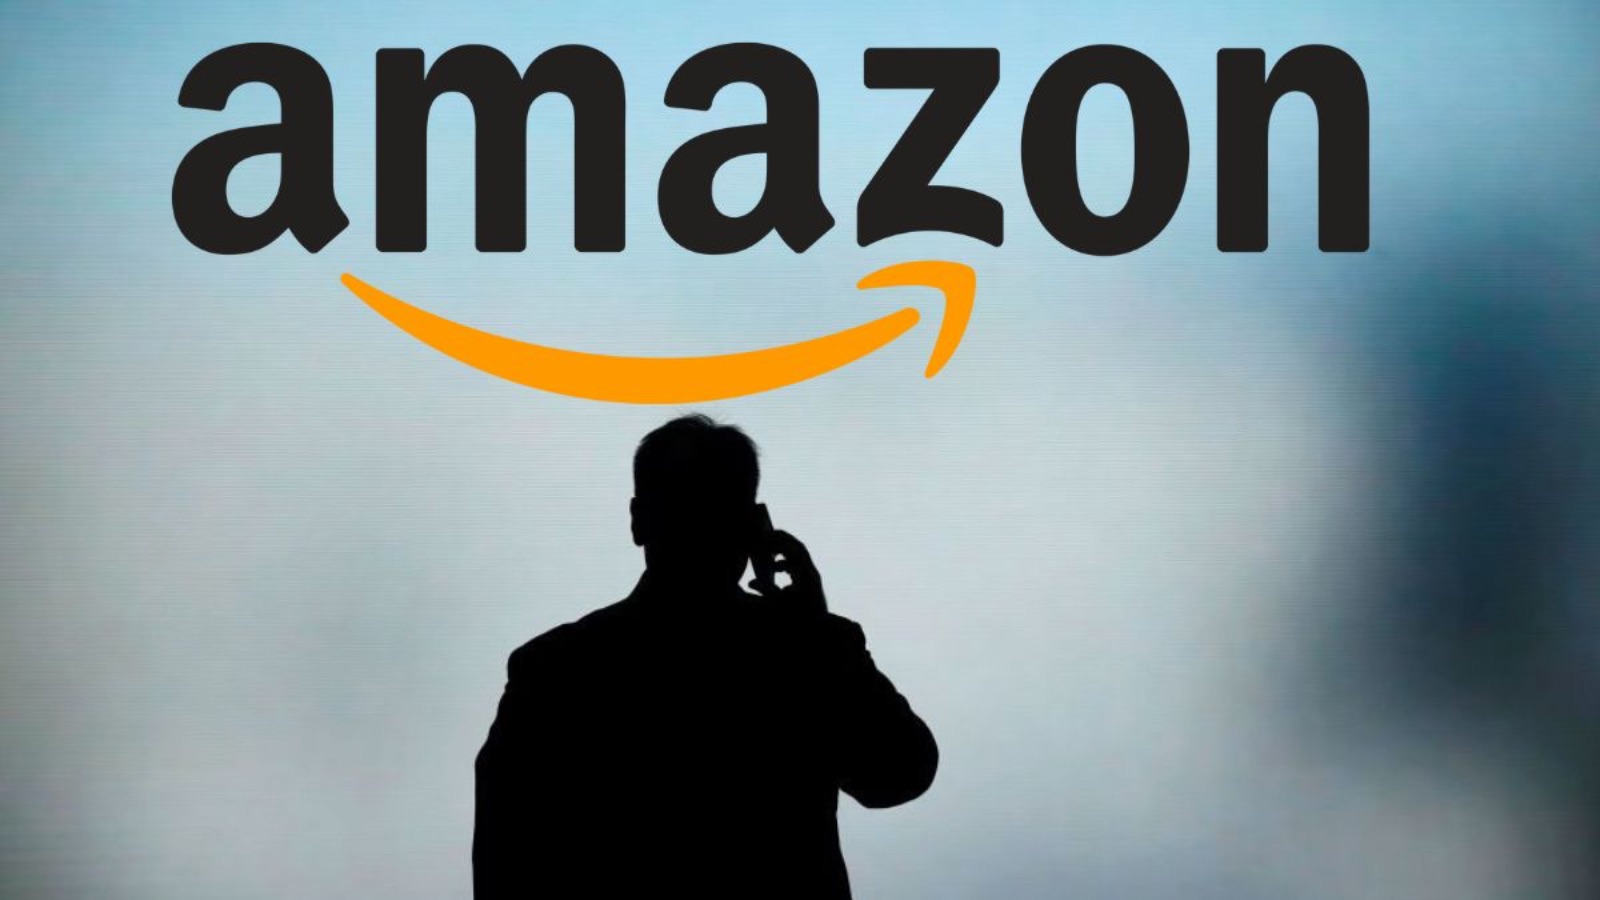 Amazon, Booking, Expedia, Trustpilot ed altri contro le recensioni false